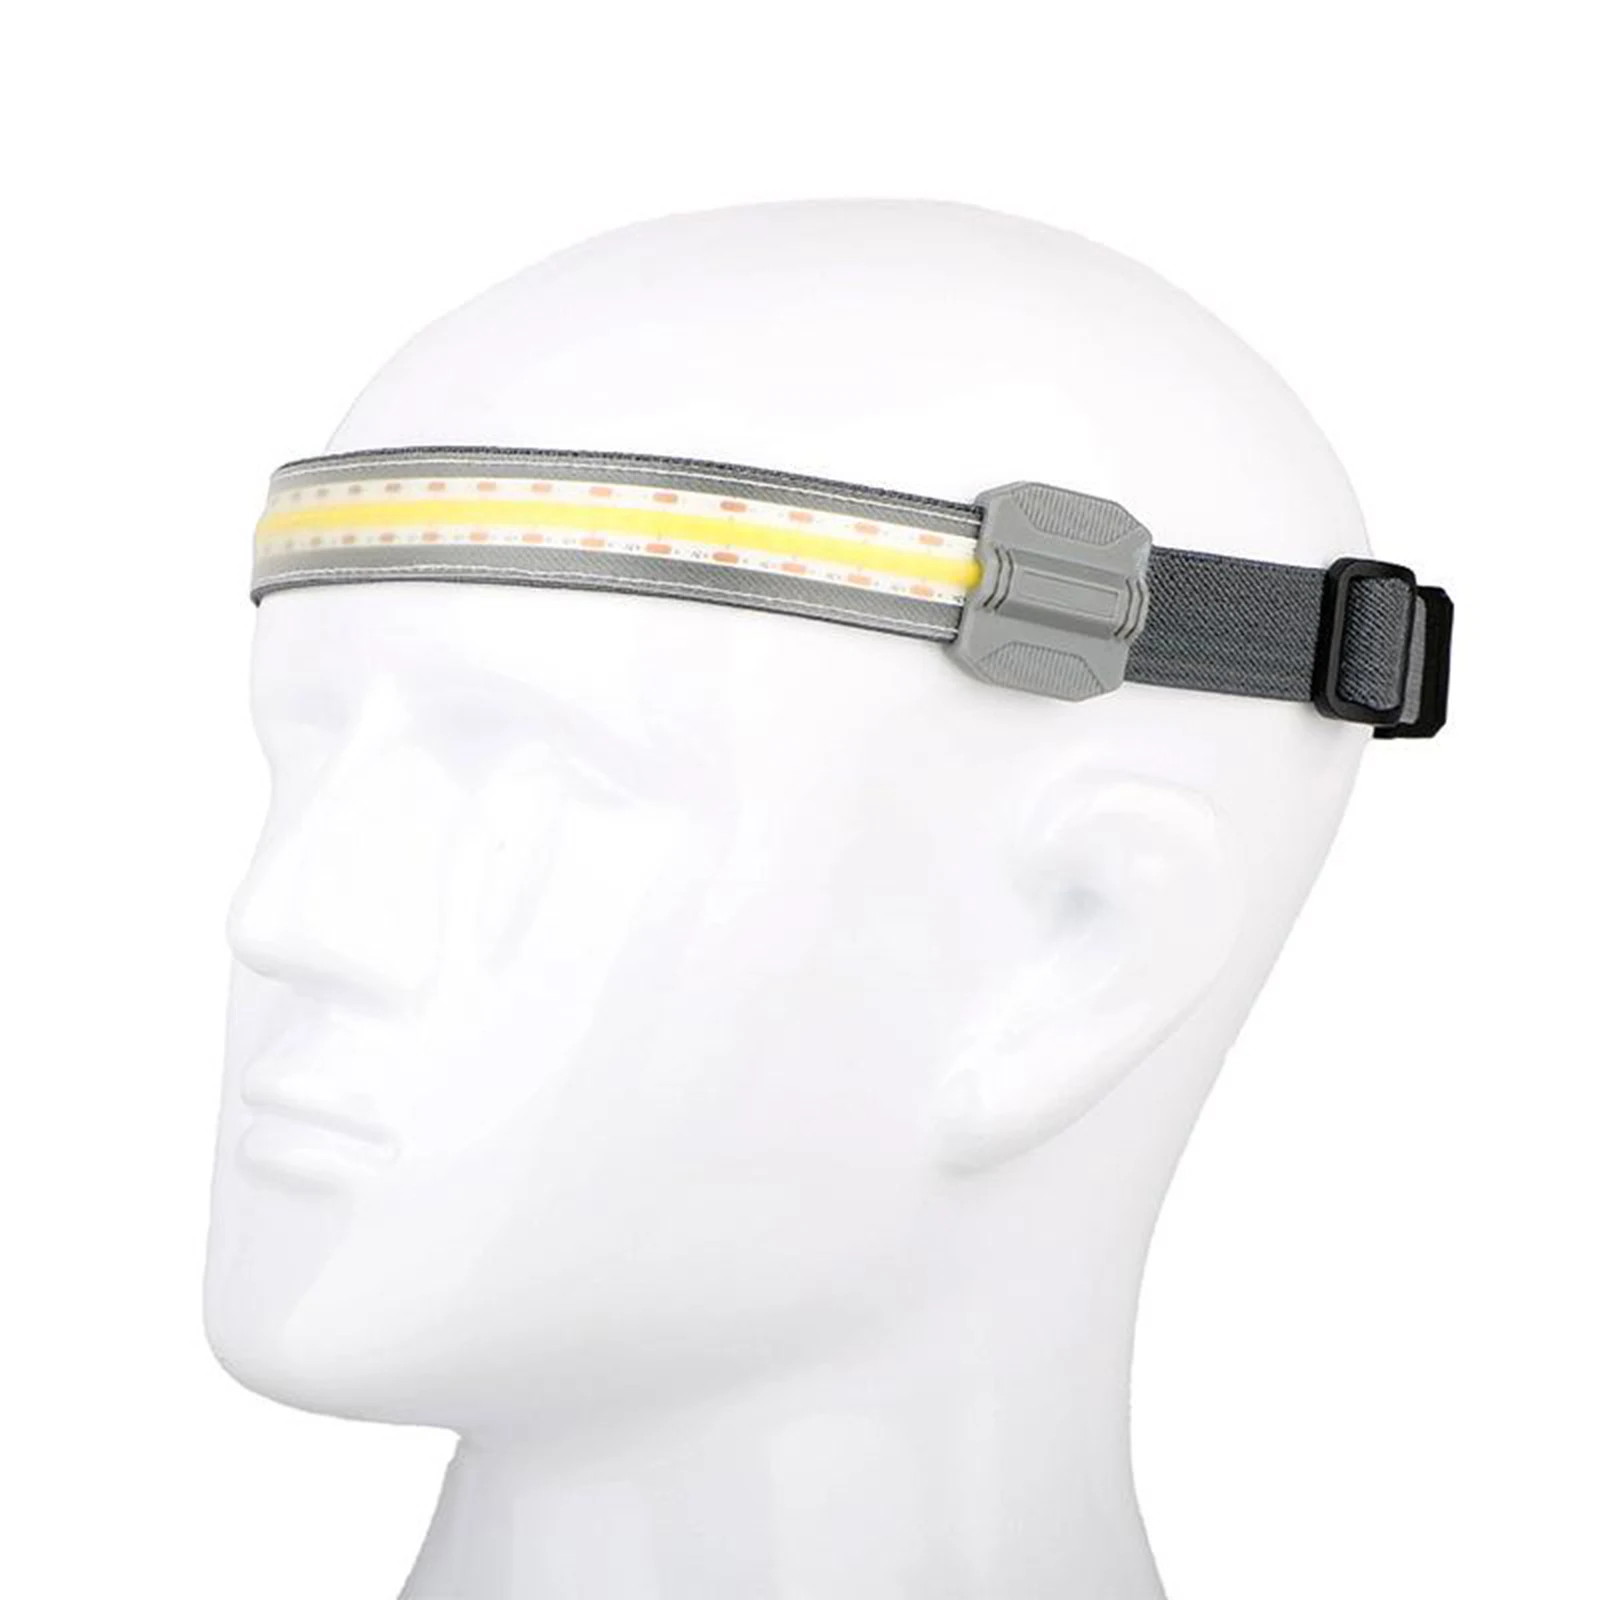 Super Bright COB Work Light Headlight, Rechargeable LED Headlamp, Camping Hunting Running Head Light with Adjustable Headband